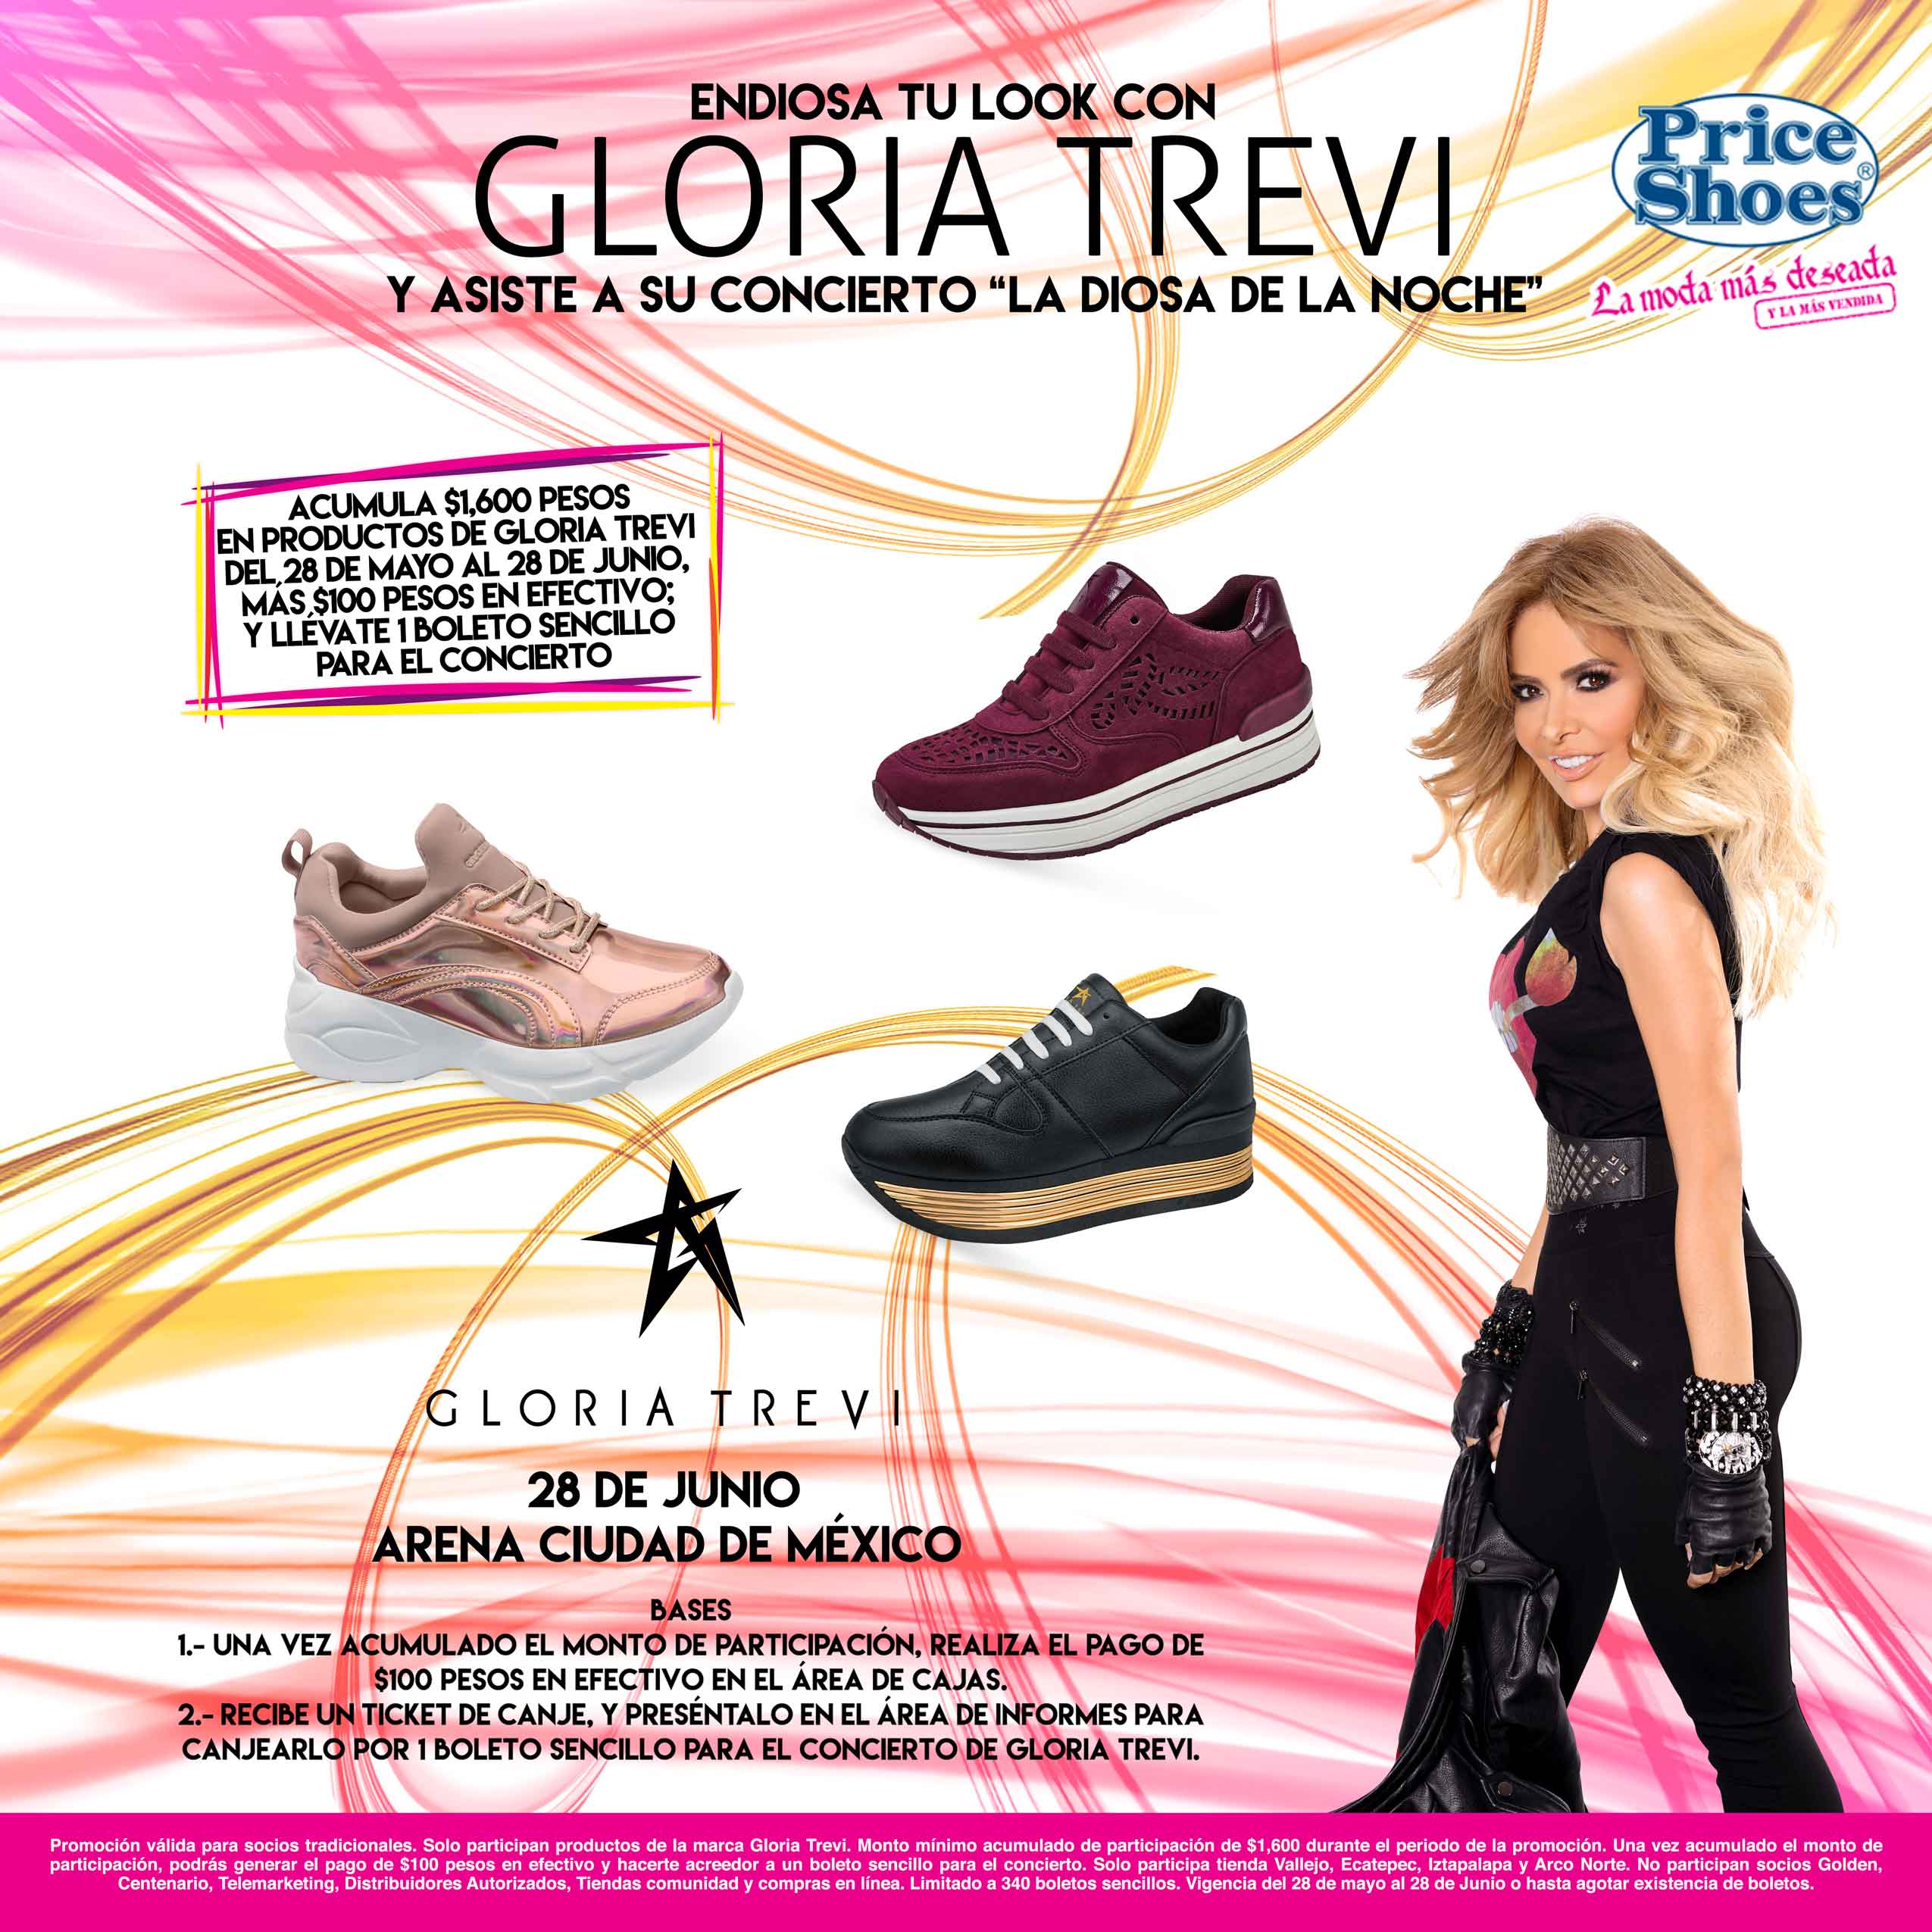 Gloria Trevi Colección (@TreviShoes1) / Twitter